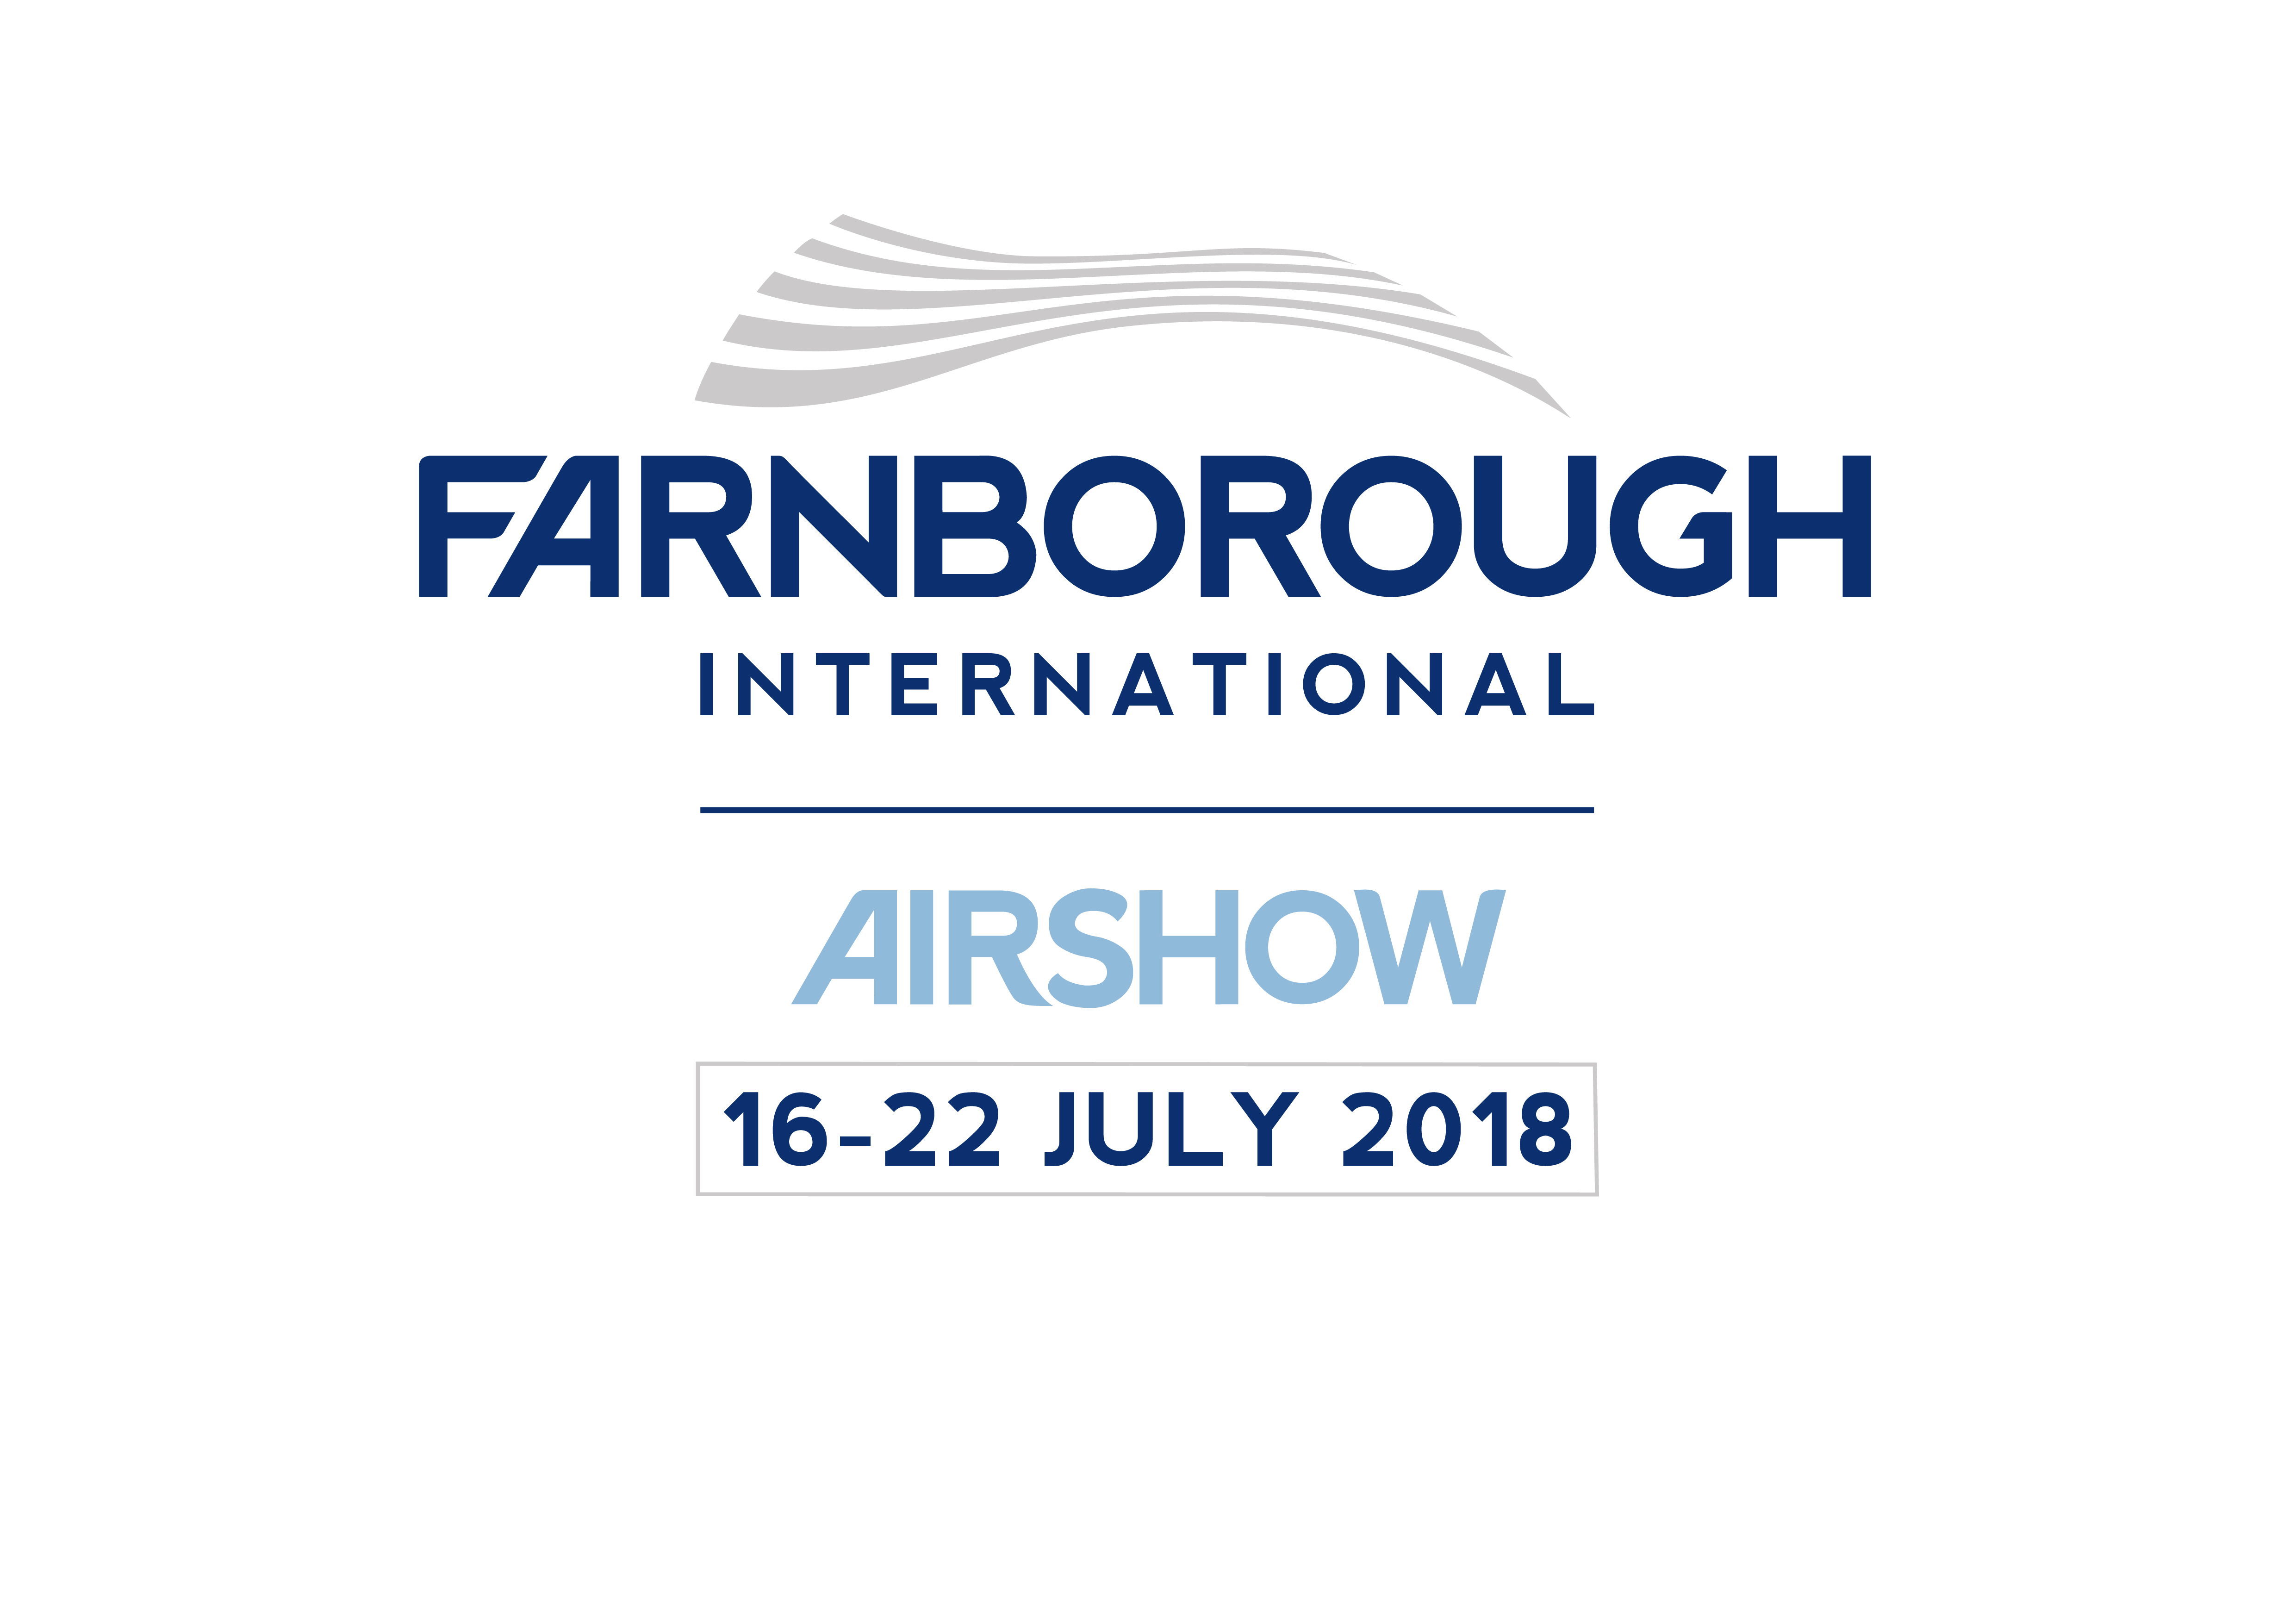 Farnborough international_airshow trade logo_with dates_stacked_White BG-01